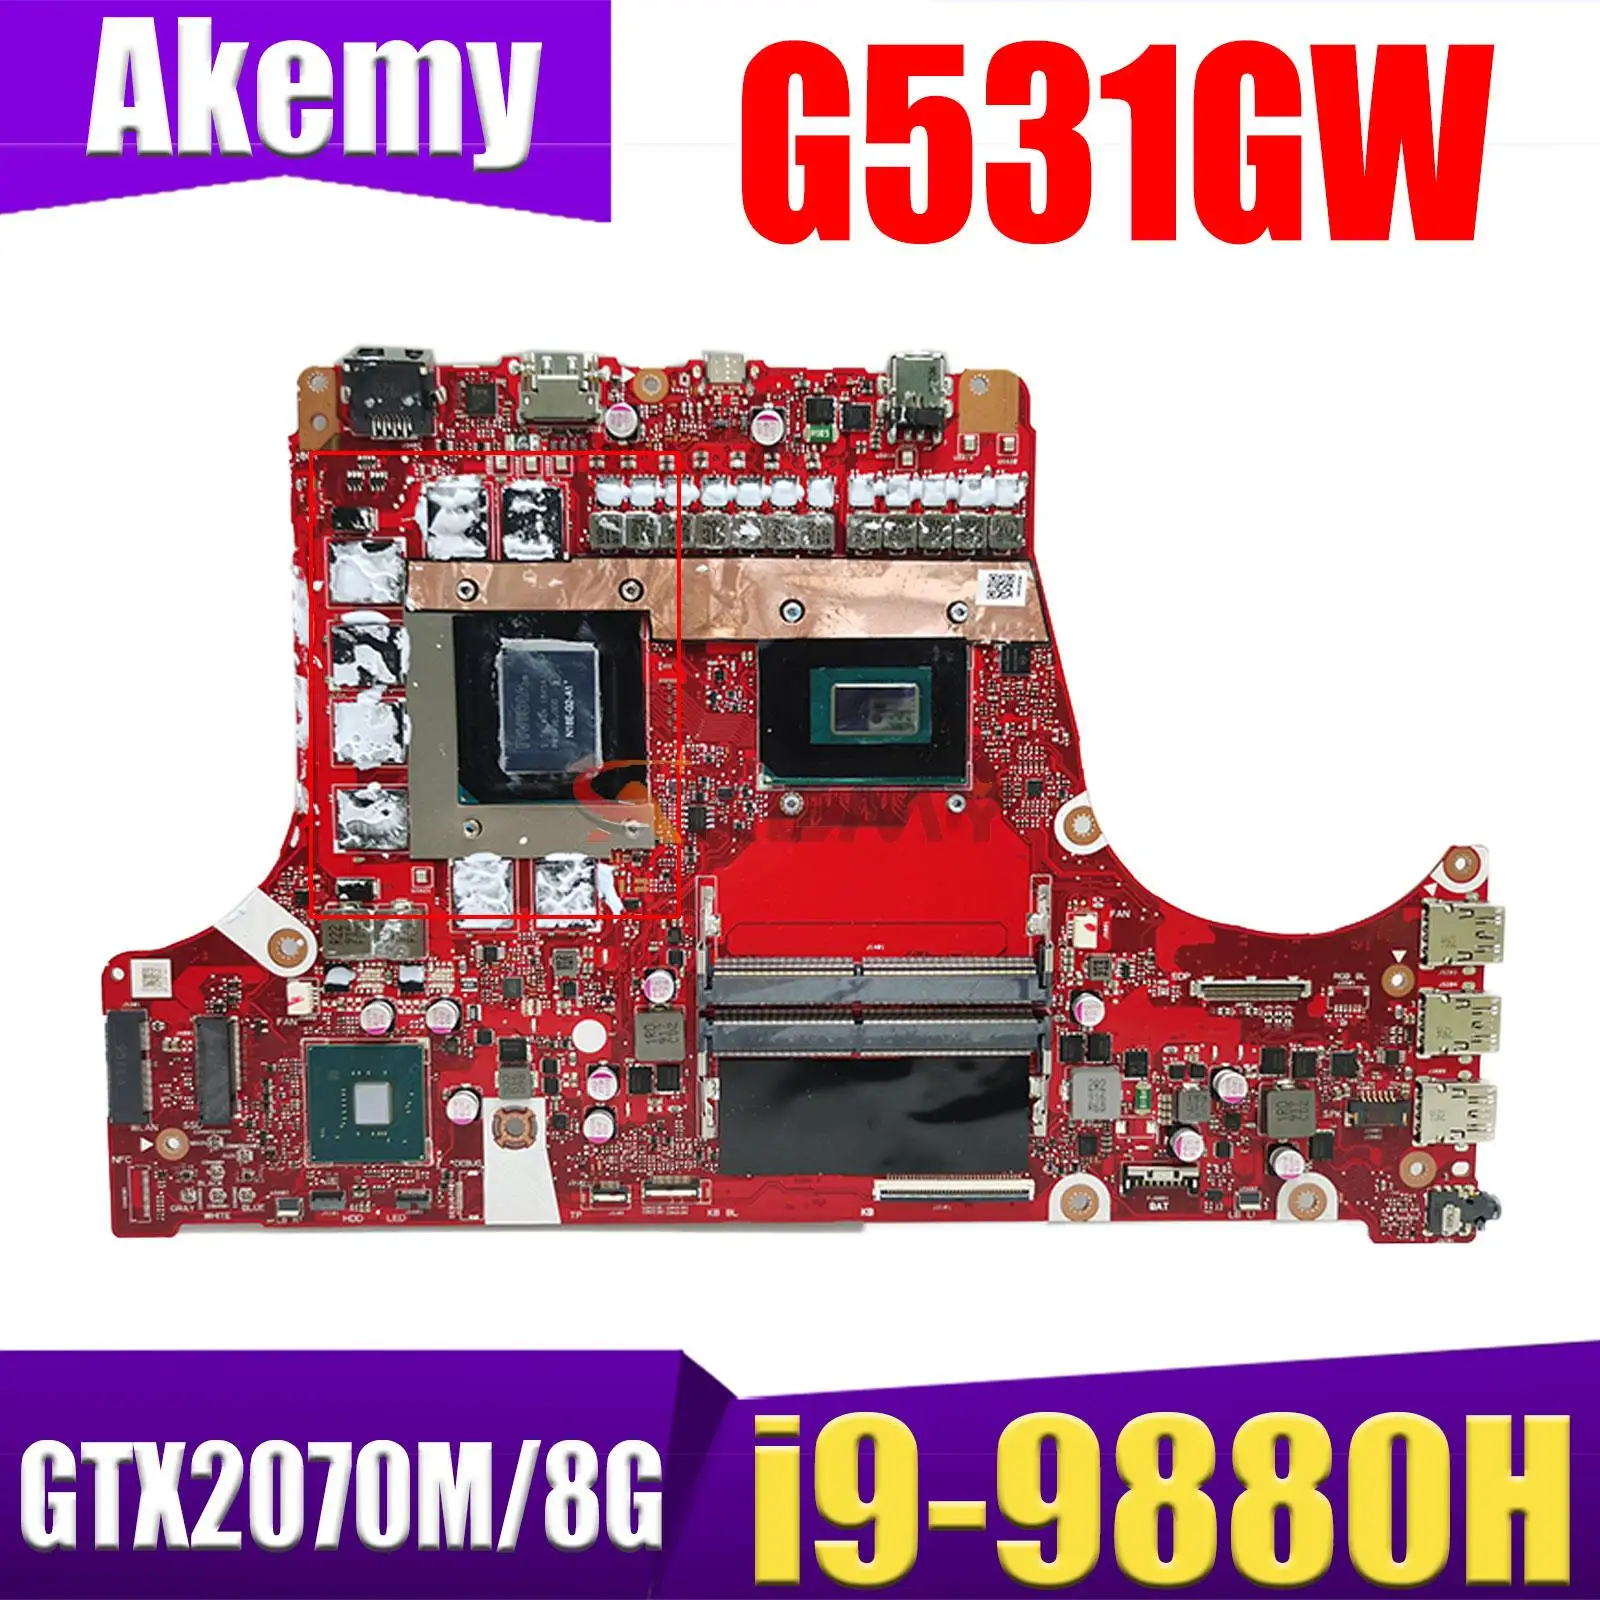 

G531GW i9-9880H CPU GTX2070M/8G Notebook Mainboard For ASUS G531GU G531GV G531G G731GV Laptop Motherboard Exchange!